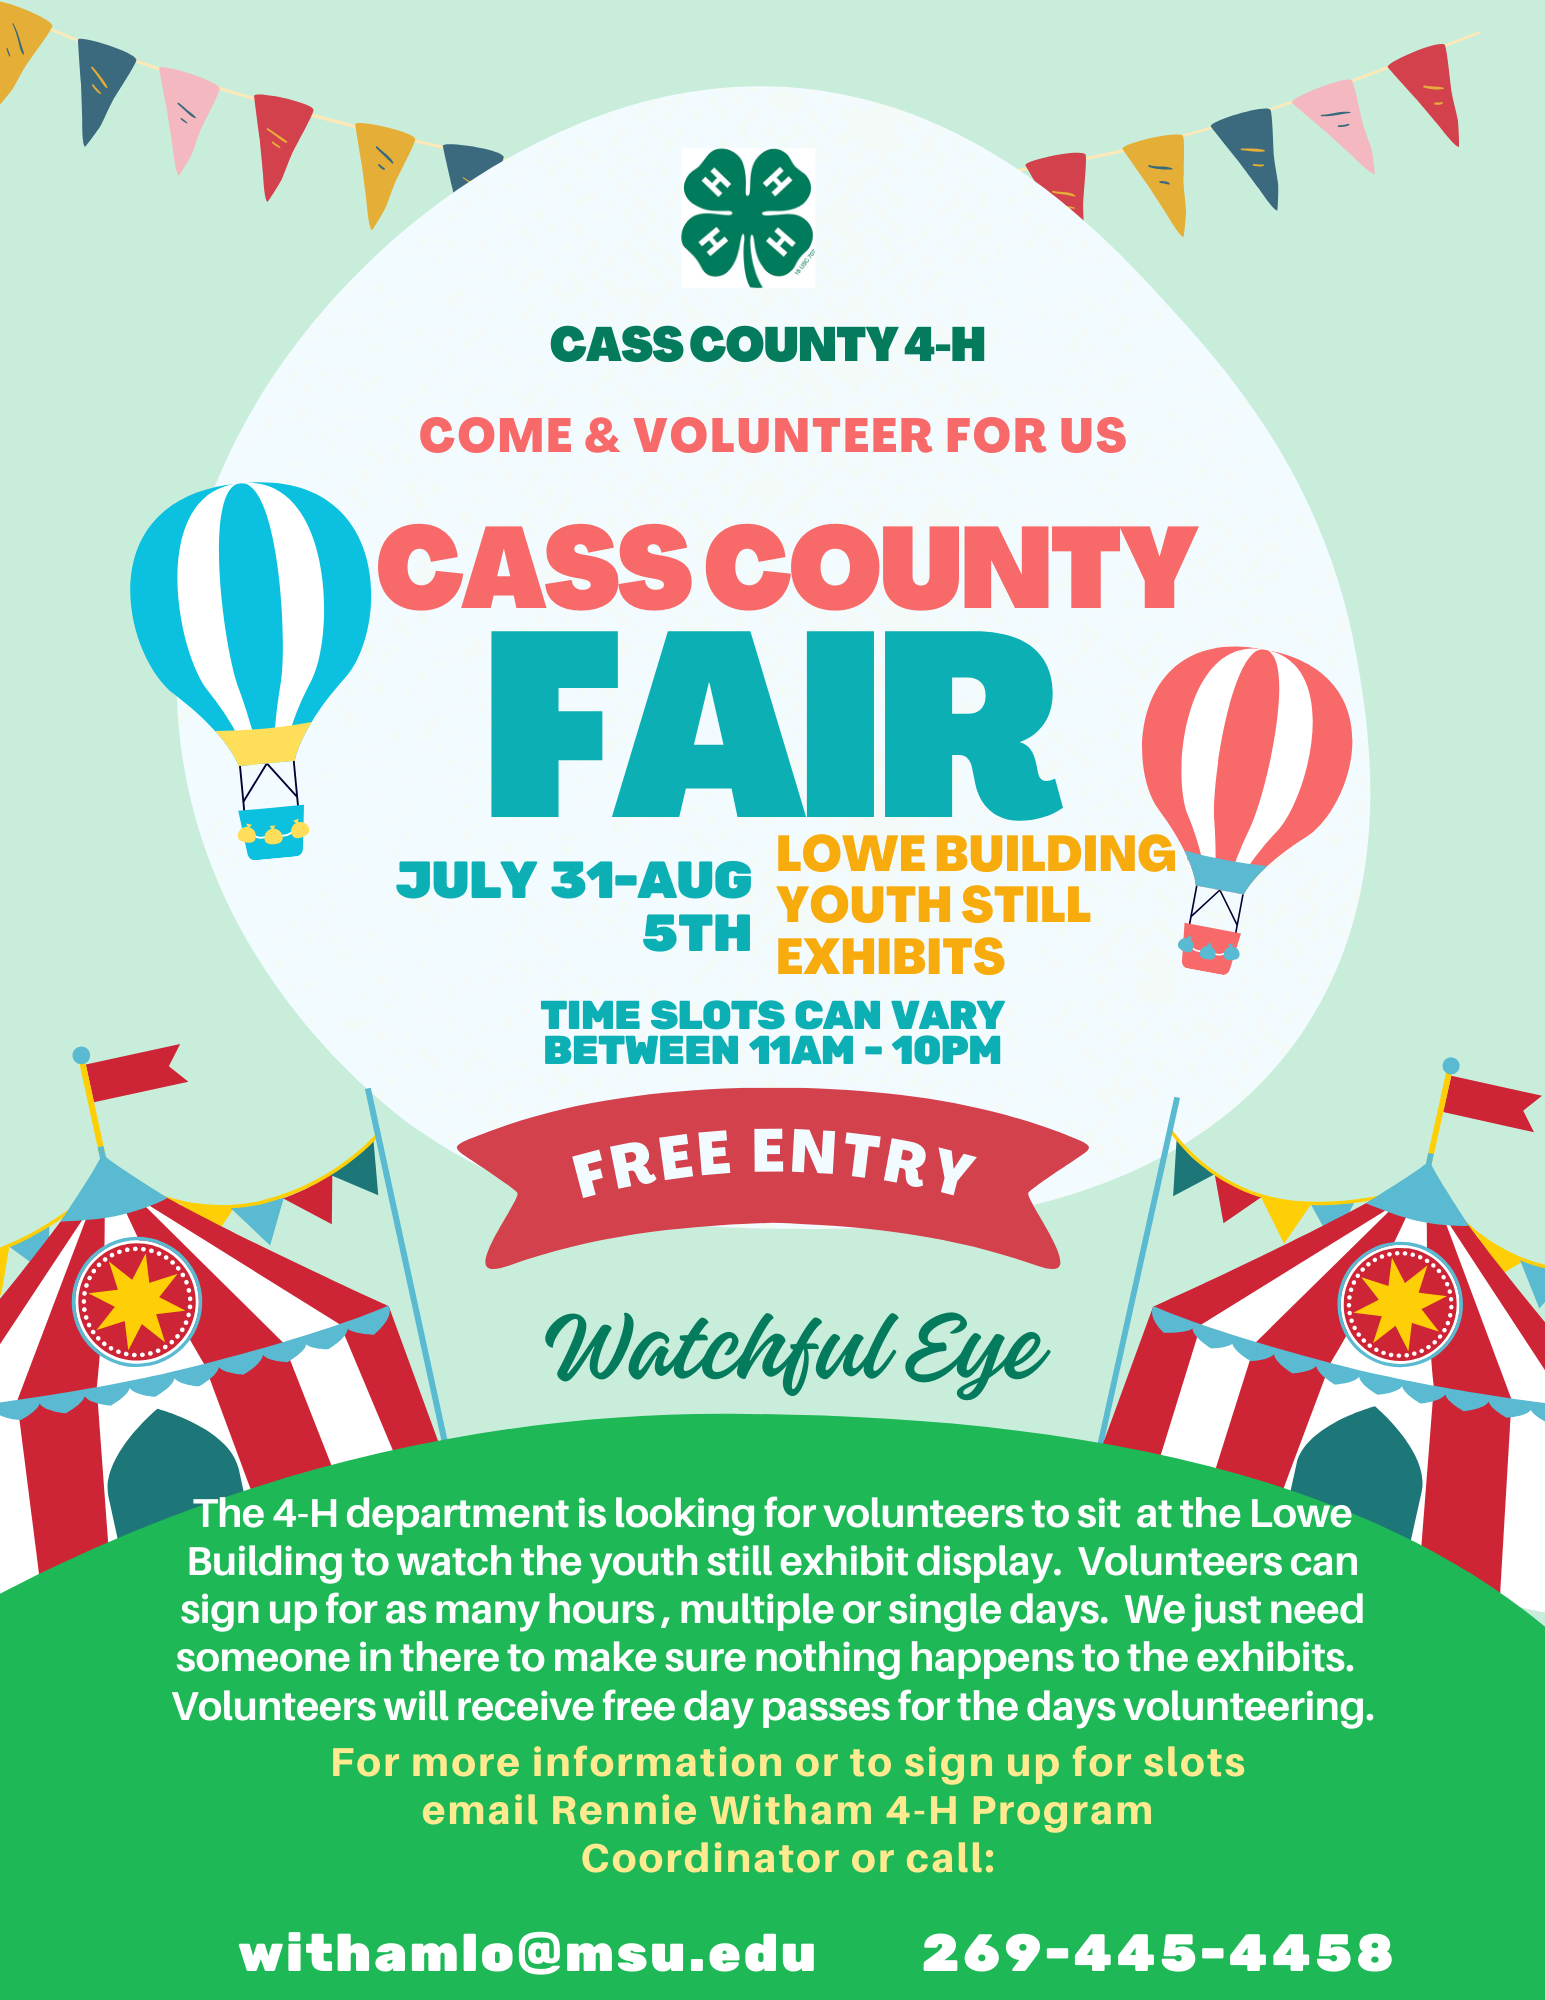 Cass County Fair Needs You! Cass County COA